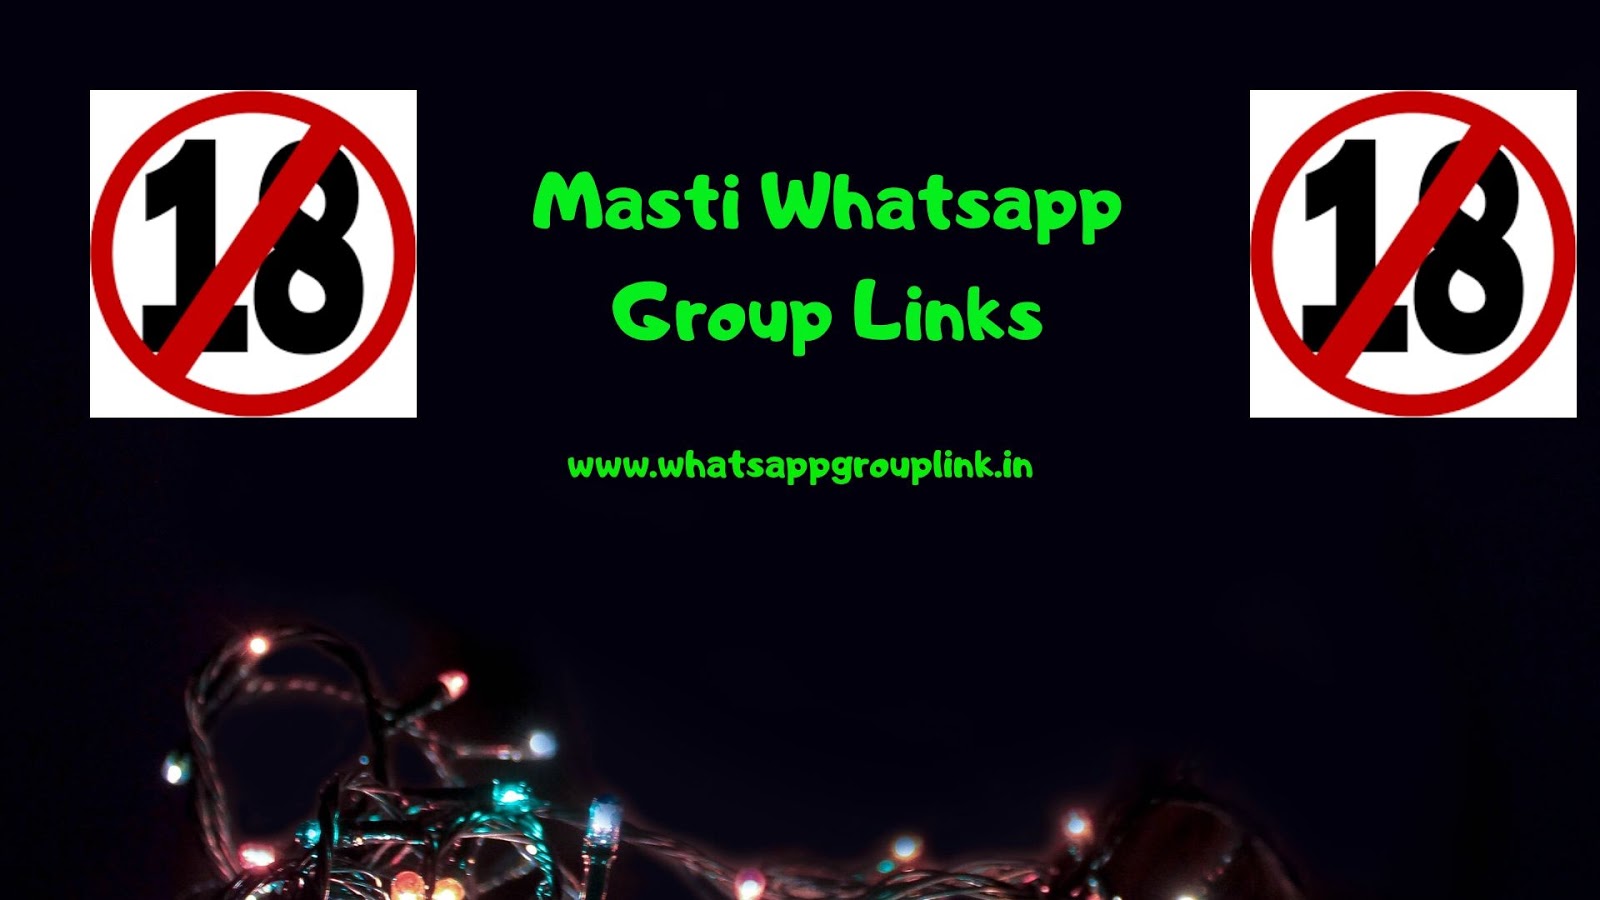 Grup Sex Masti Vidio - Masti Whatsapp Group Links - WhatsappGroupLink